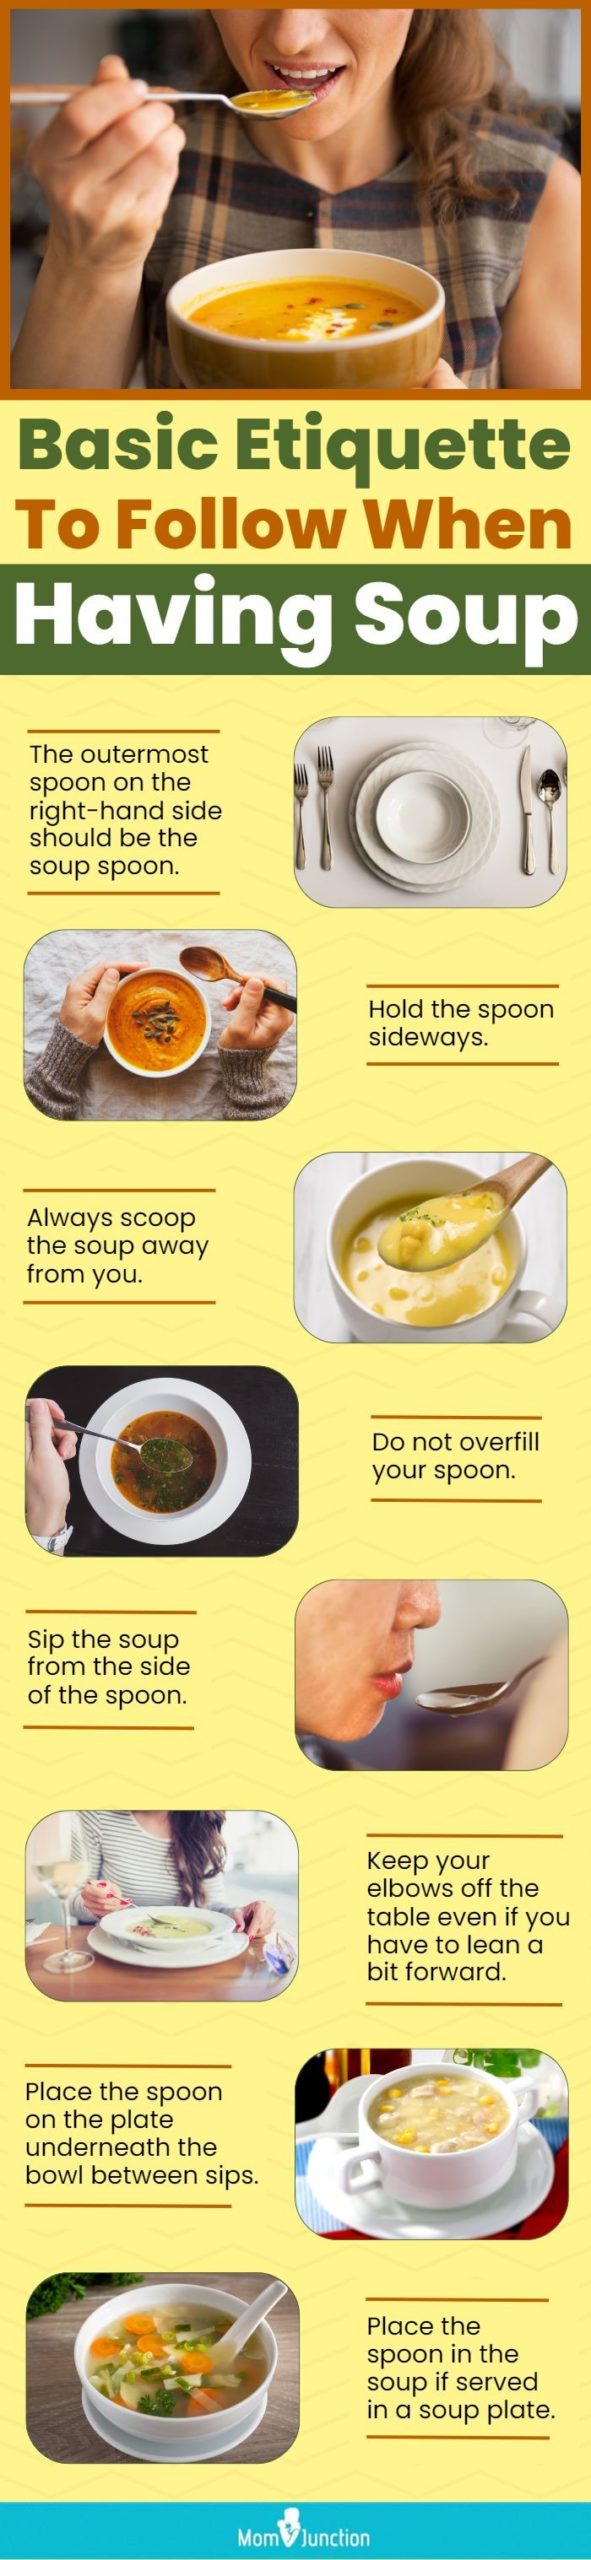 Basic Etiquette To Follow When Having Soup (infographic)